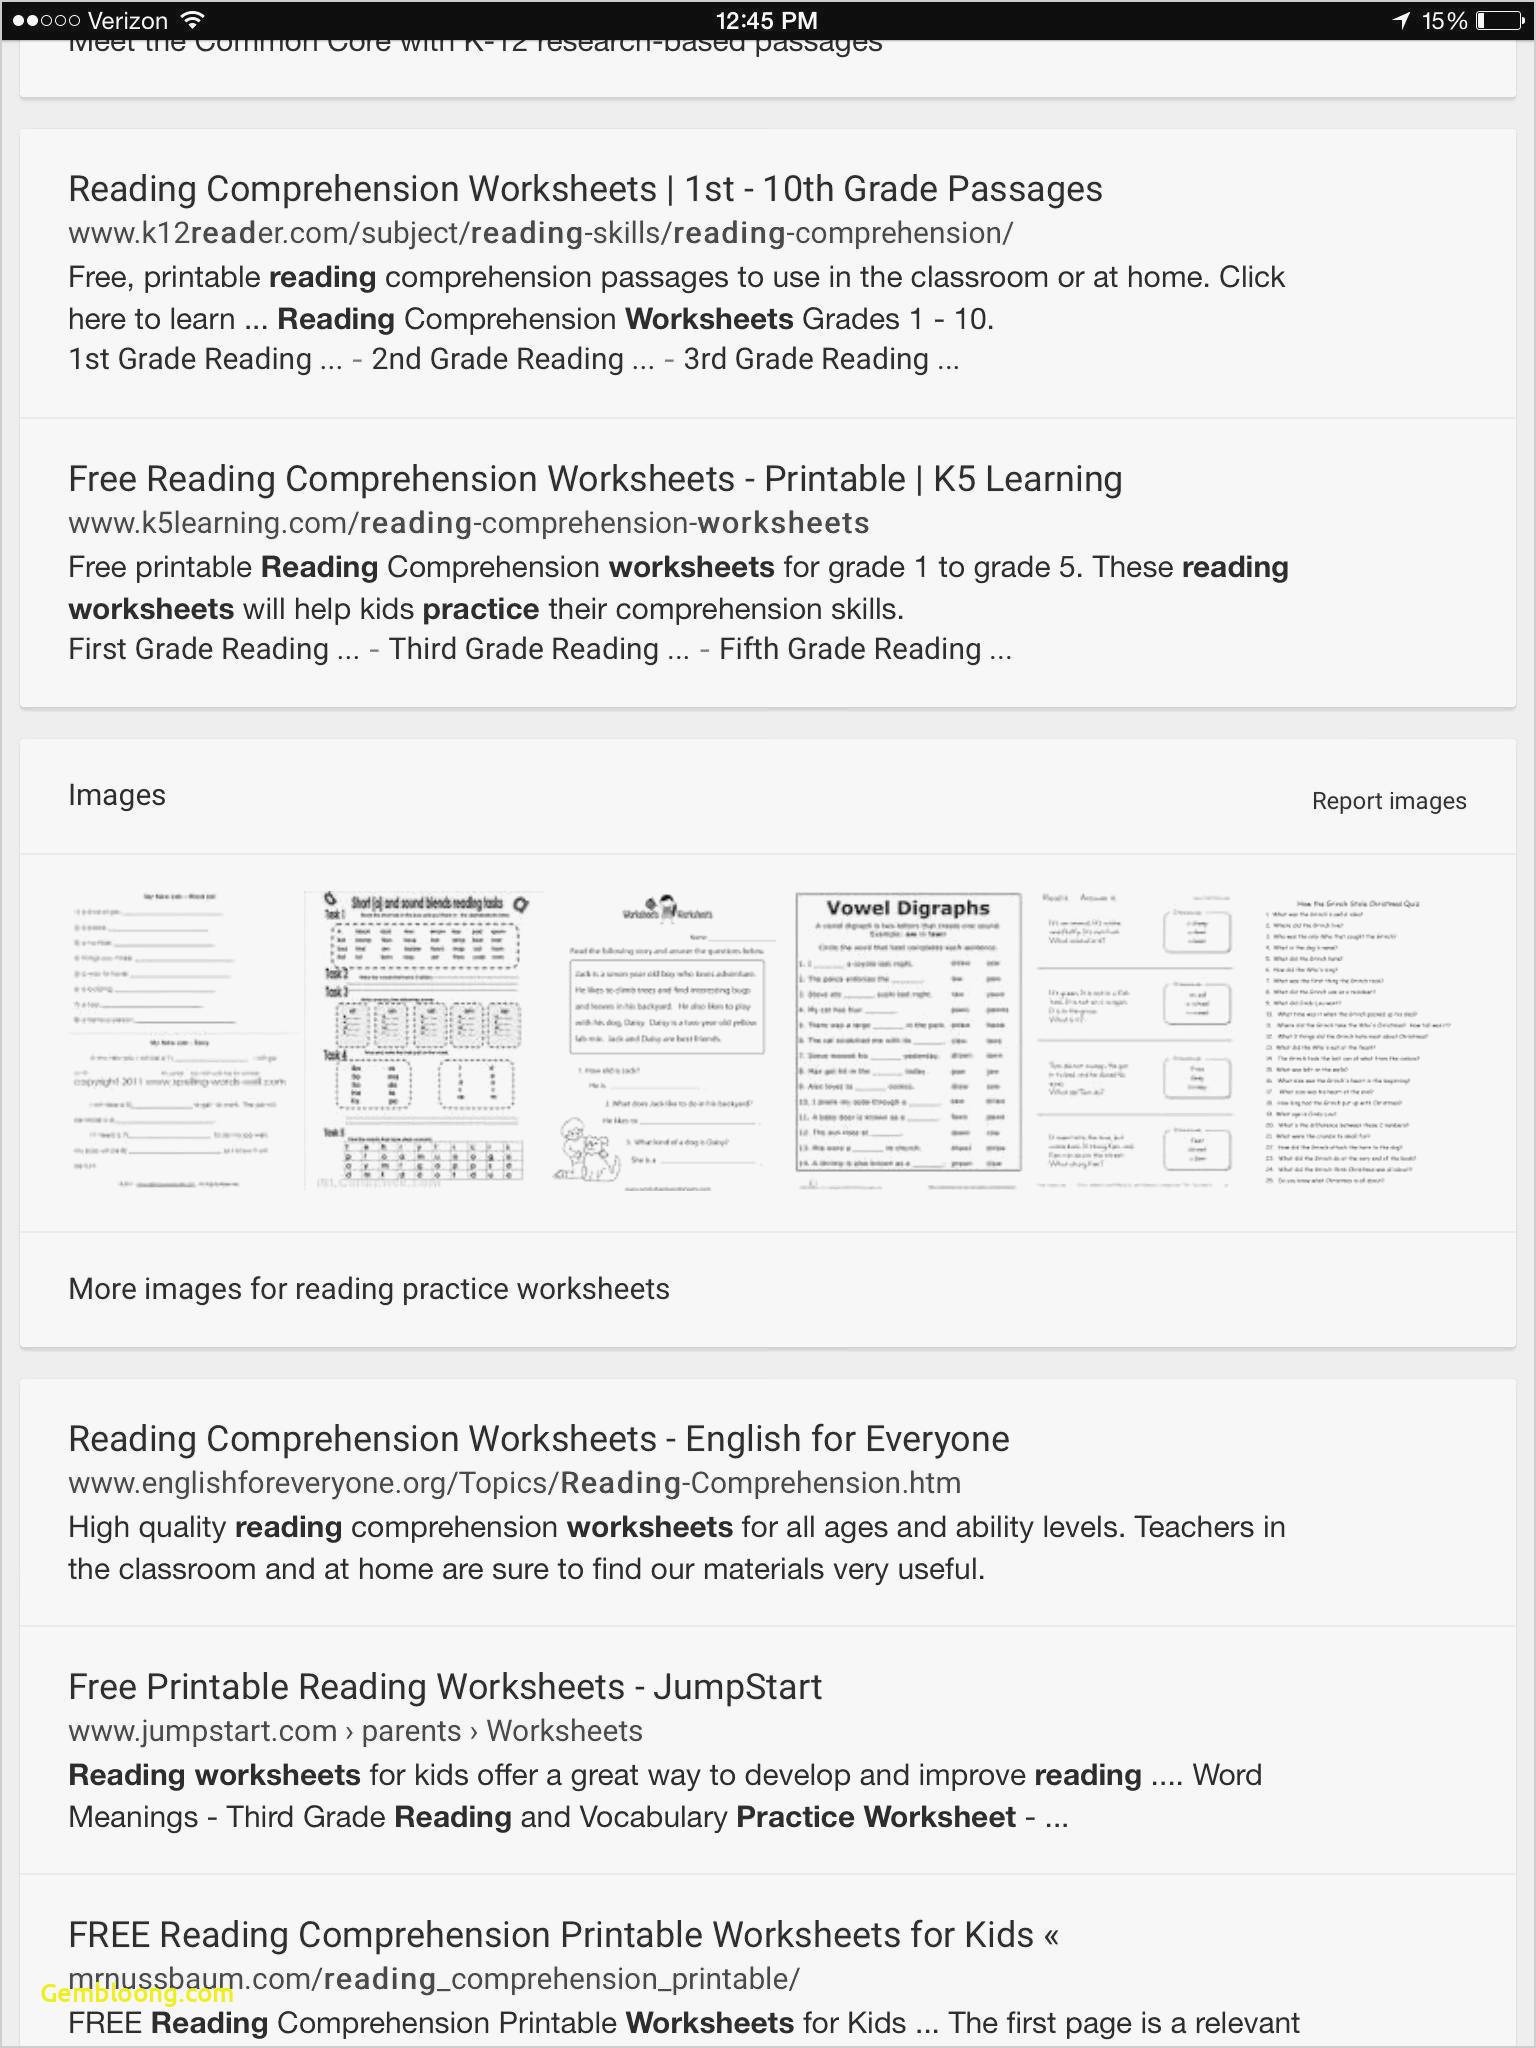 Reading Comprehension Worksheets For 1St Grade - Cramerforcongress - Free Printable 3Rd Grade Reading Worksheets